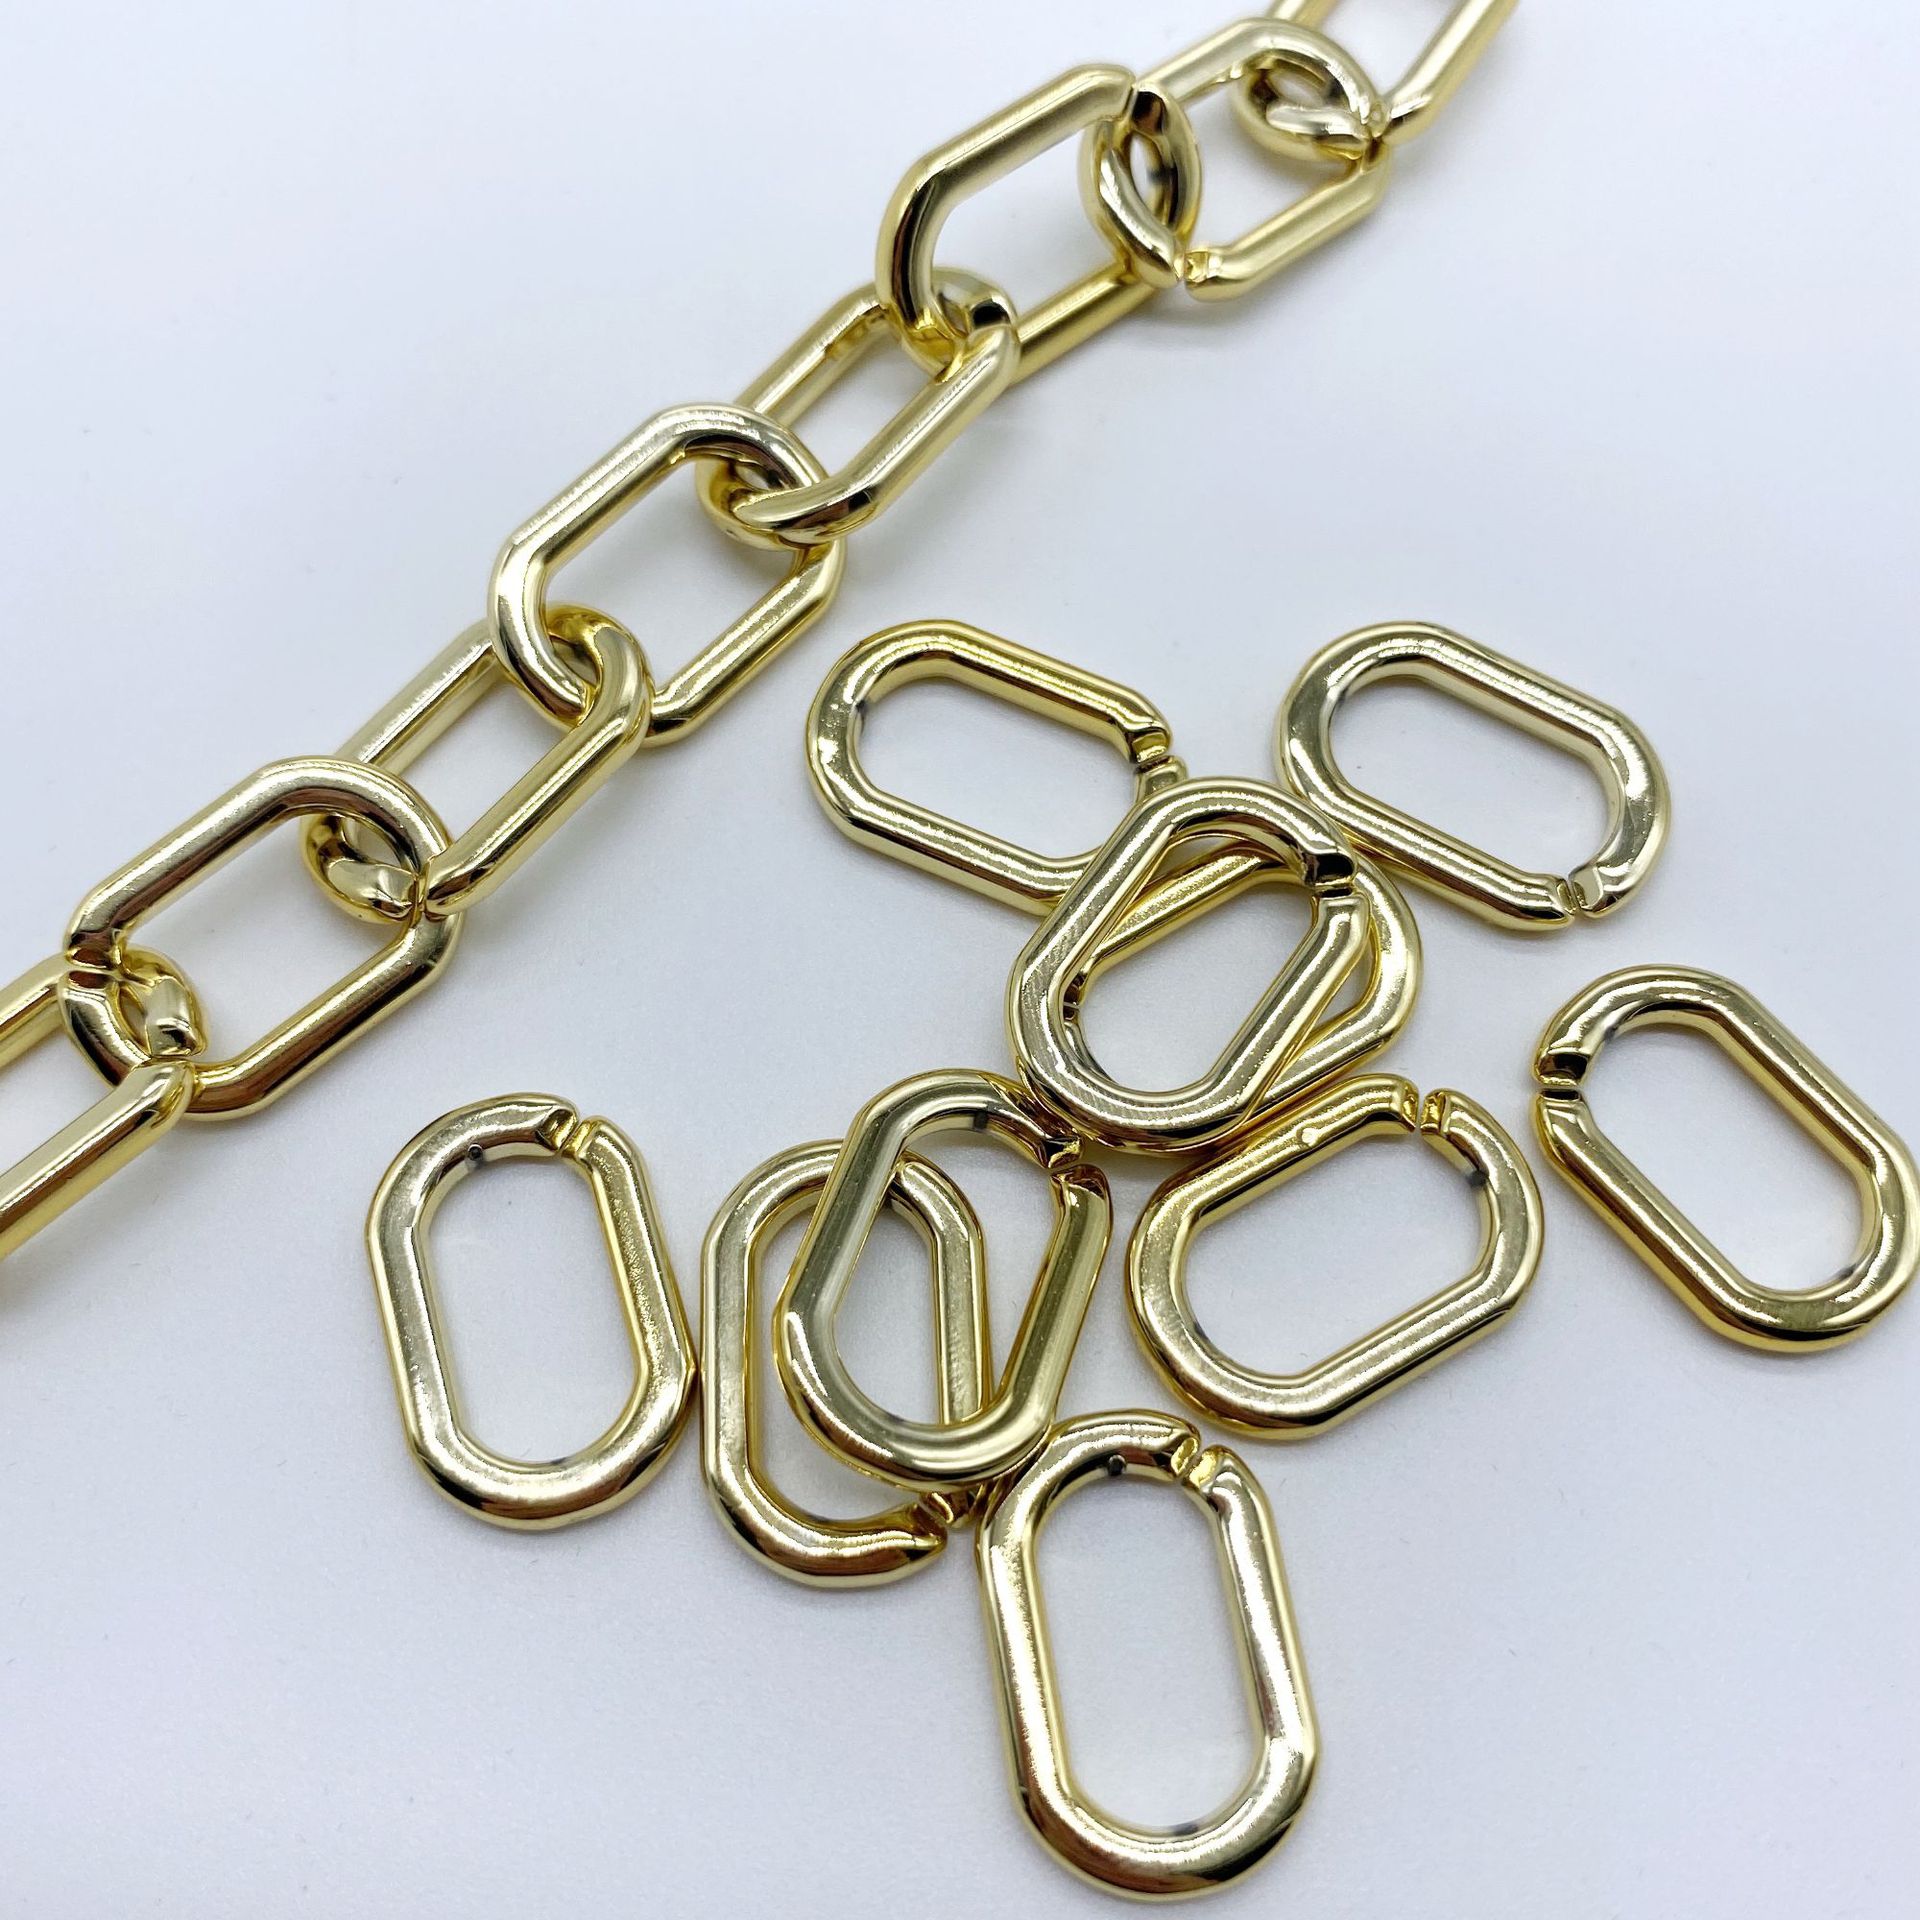 5:kc gold chain, 11x19mm